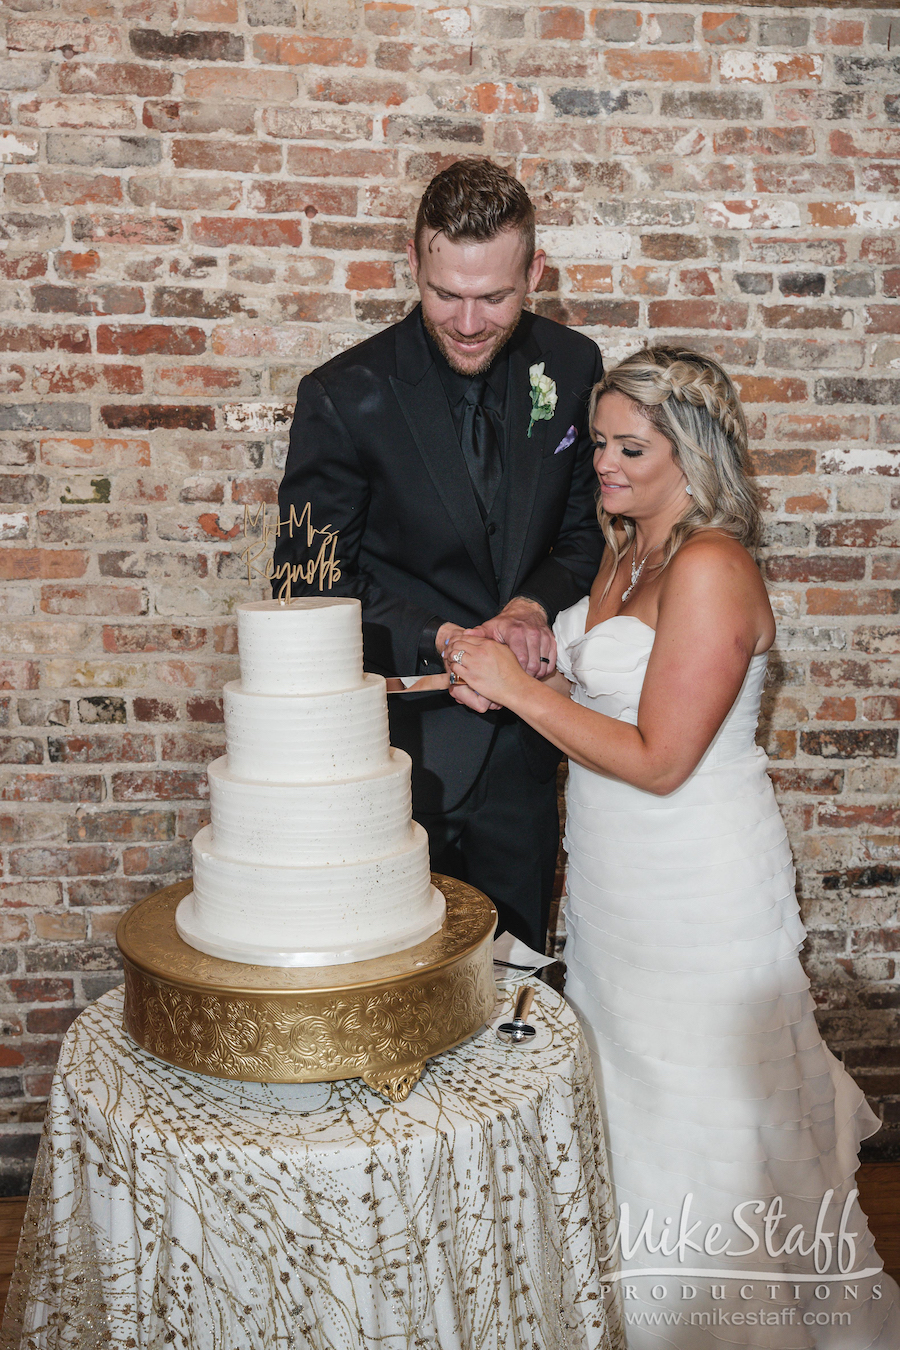 jamie and stephen cutting their wedding cake